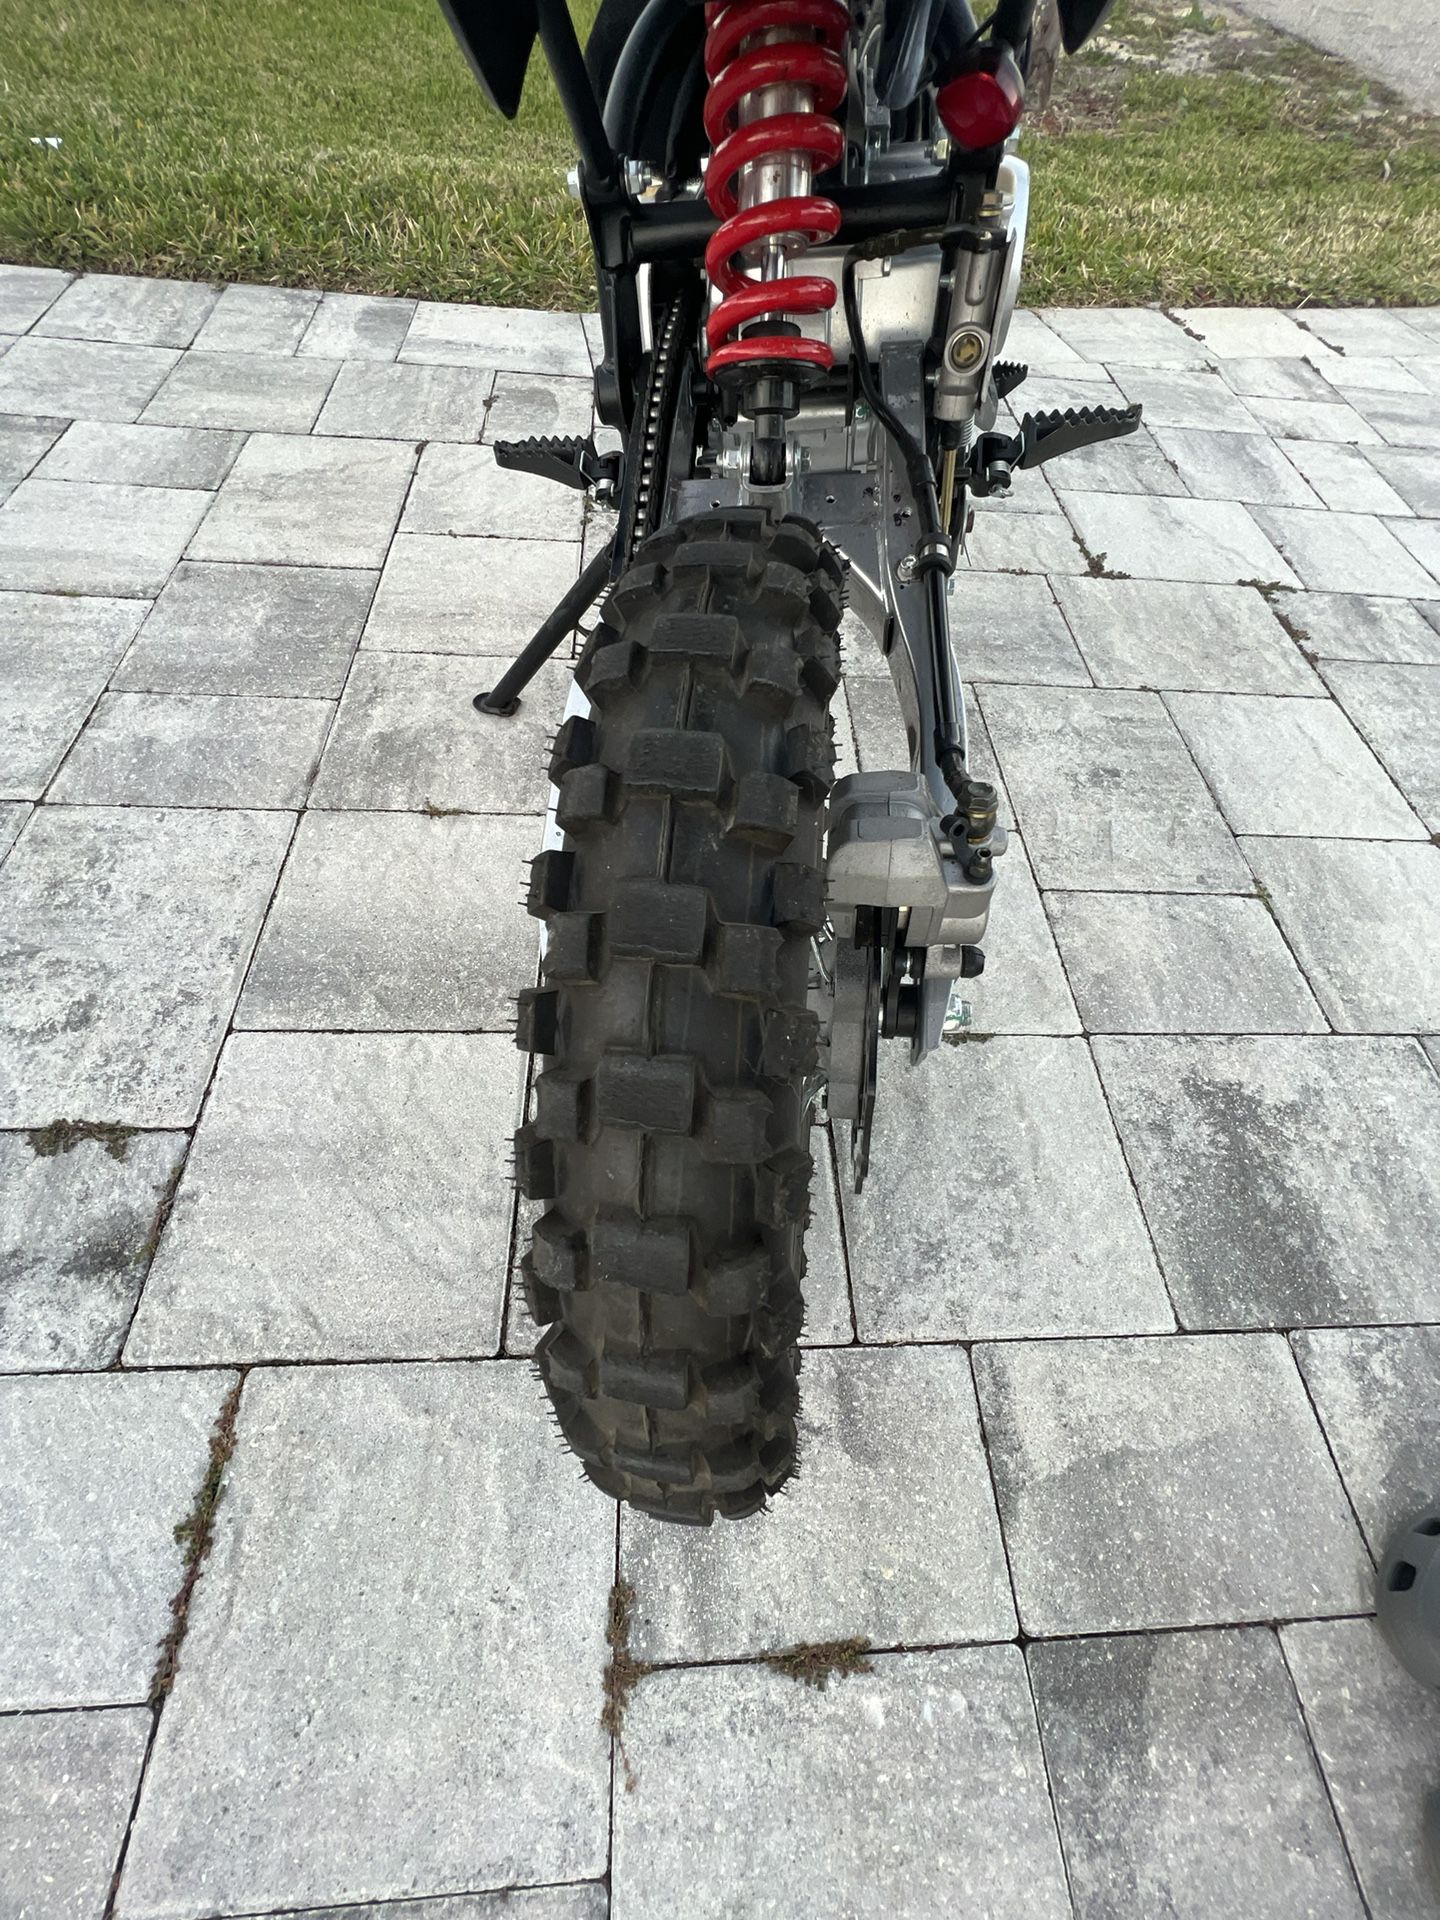 125cc Dirt bike Runs Perfectly